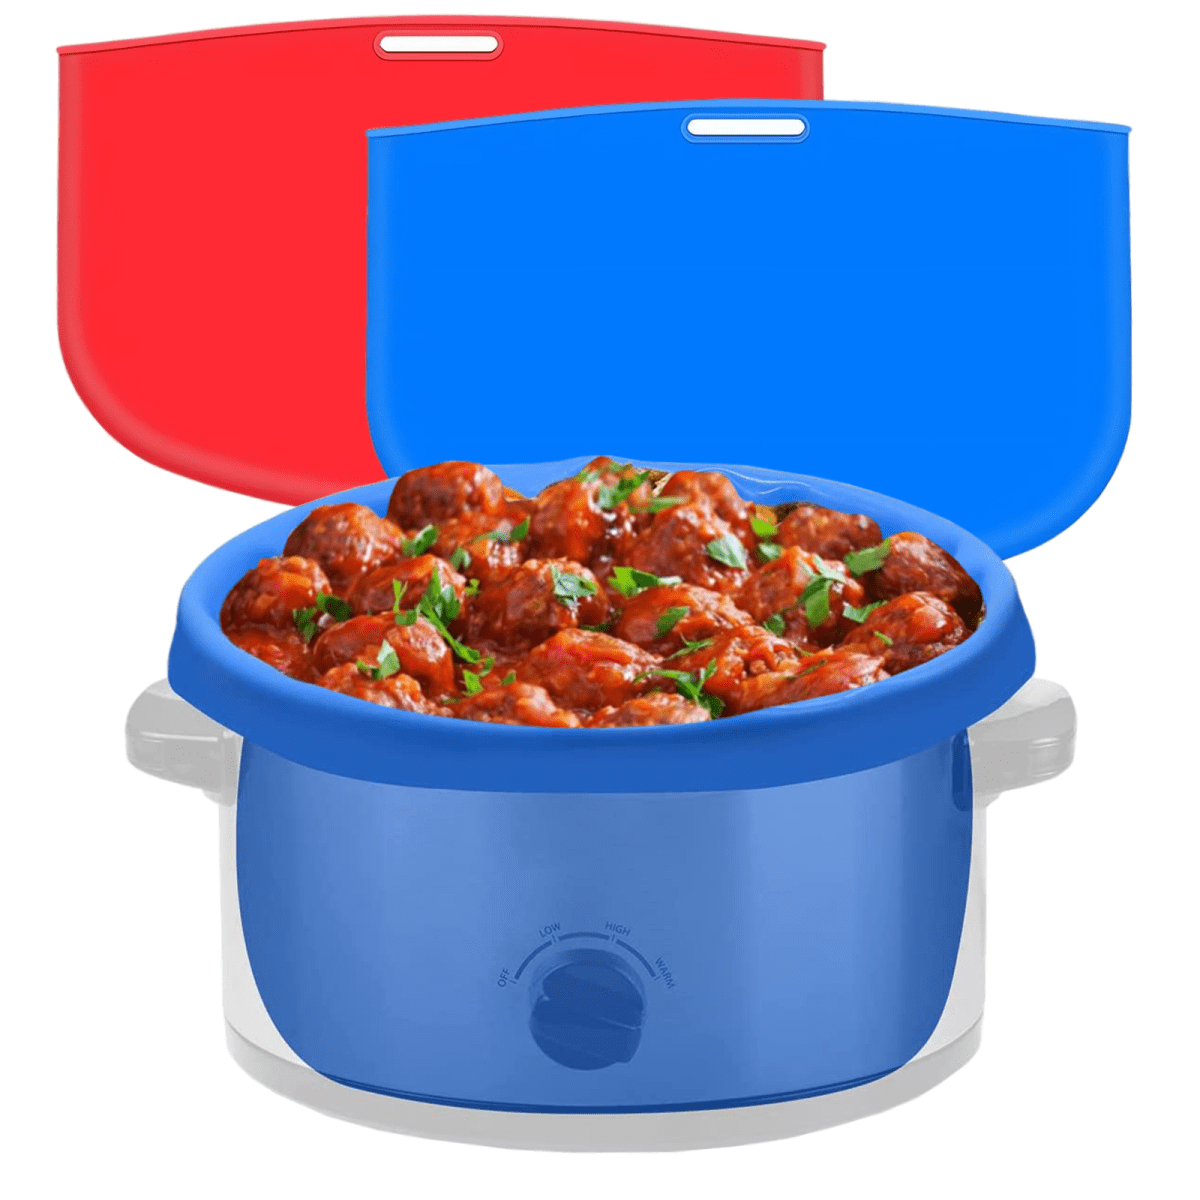 Haldane 2 Pack Slow Cooker Liners - Reusable Crock Pot Divider, Safe Silicone Cooking Bags Fit 7-8 Quarts Oval or Round Pot (Fit 8 qt Red+Blue)